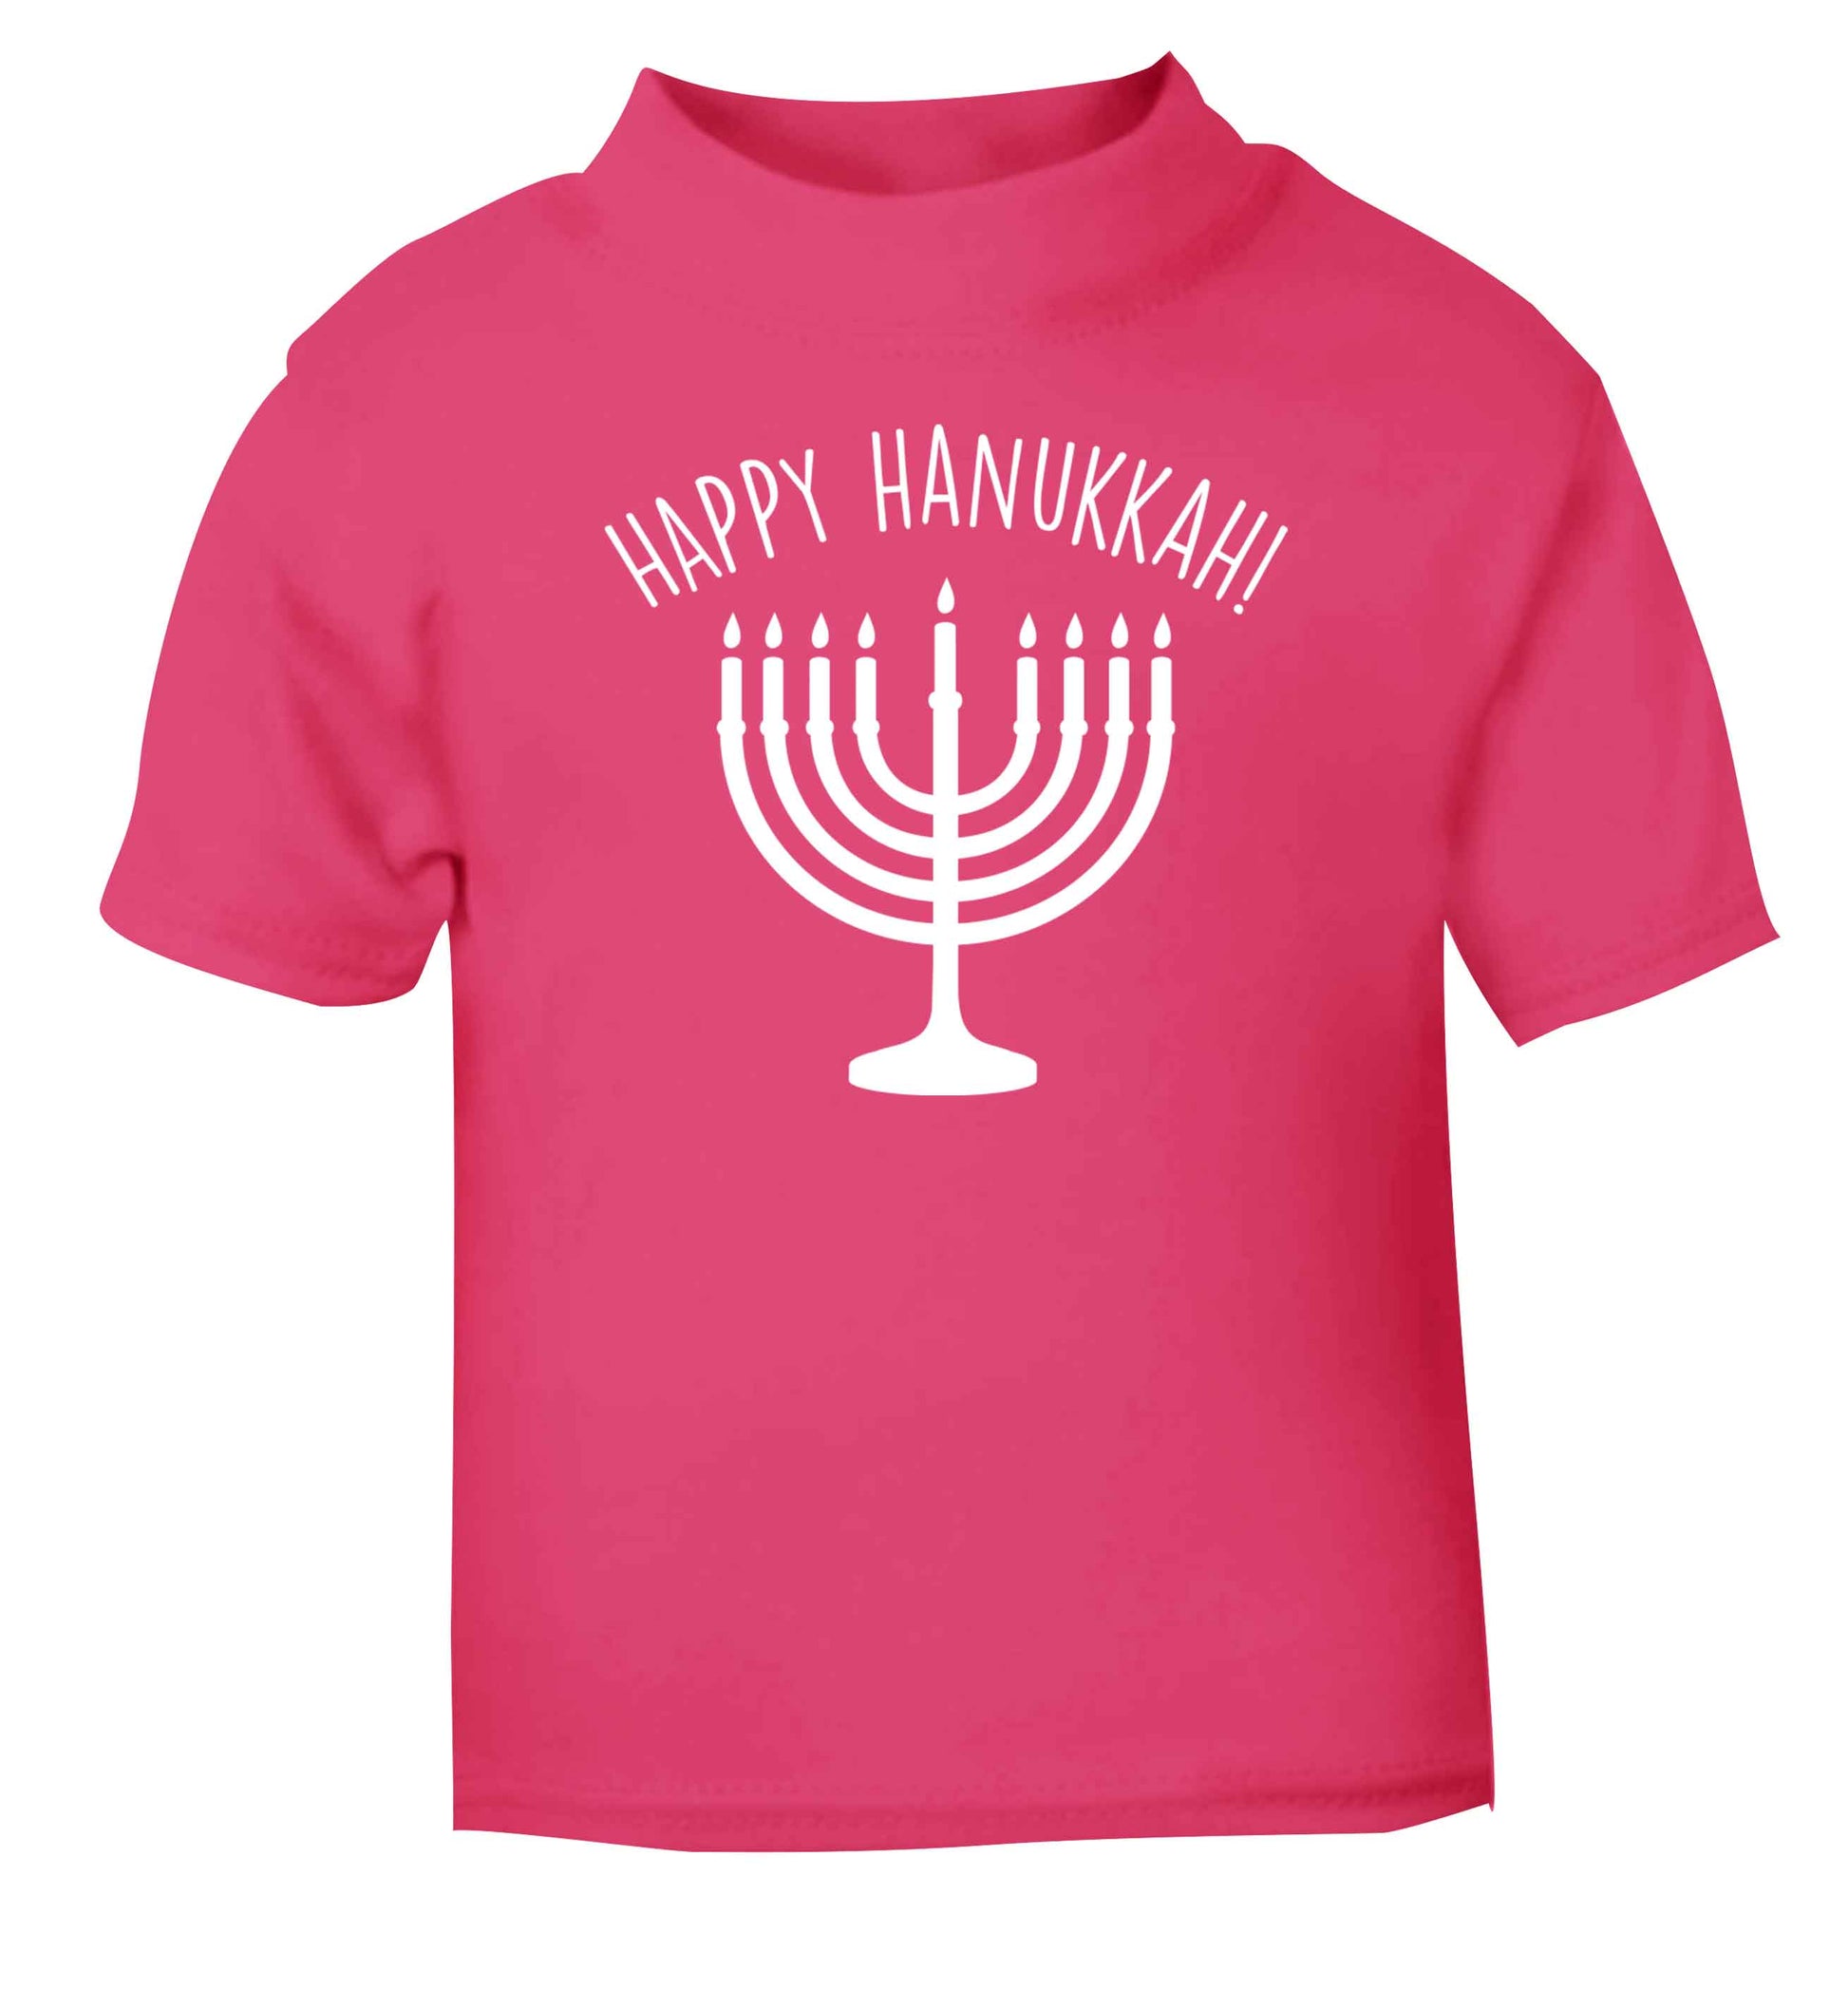 Happy hanukkah pink baby toddler Tshirt 2 Years